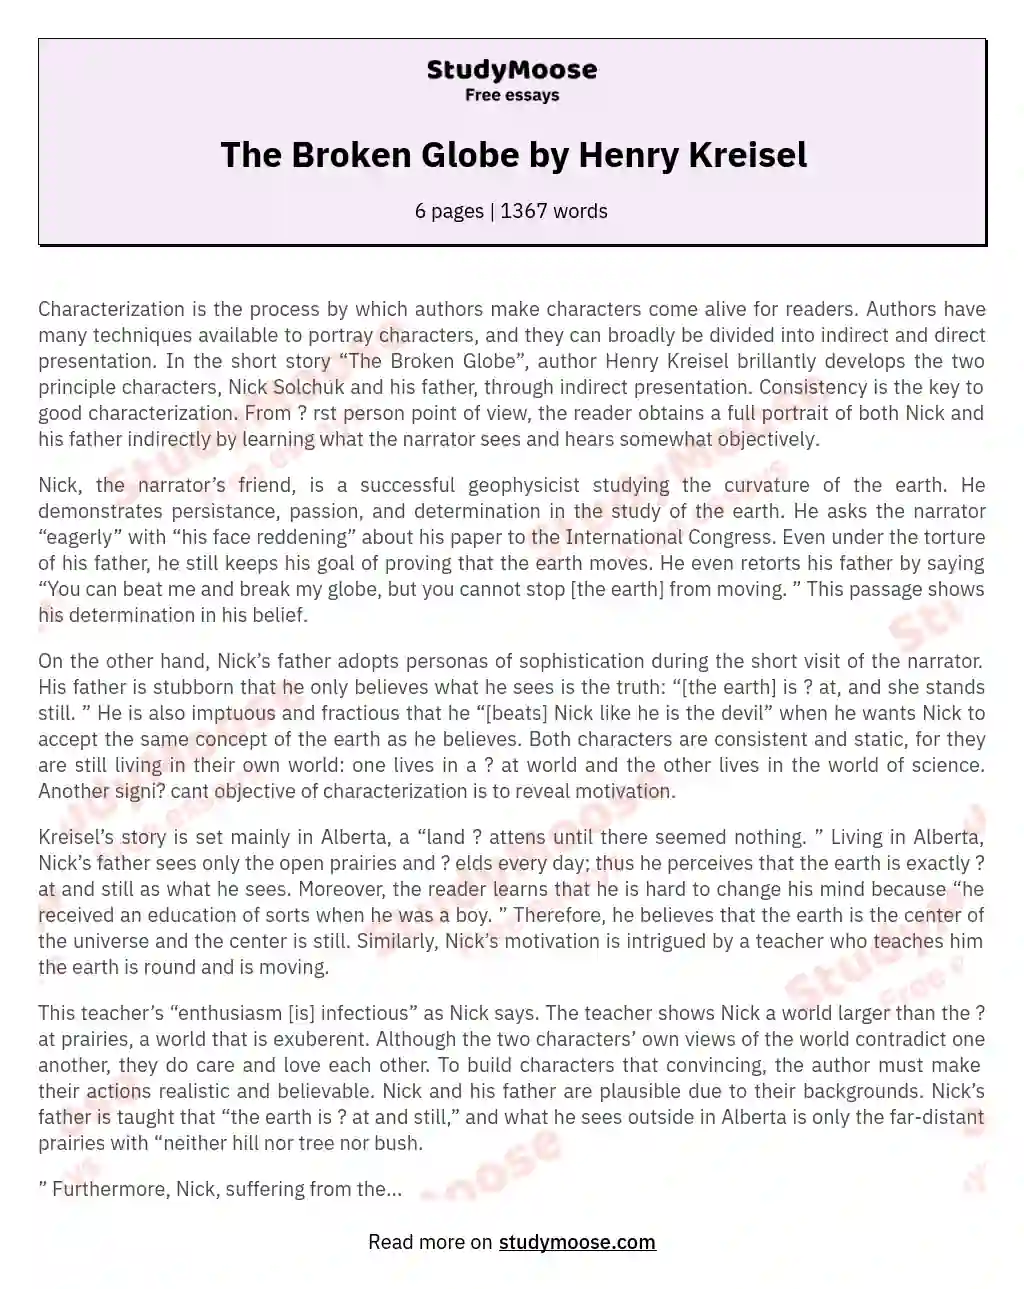 The Broken Globe by Henry Kreisel essay